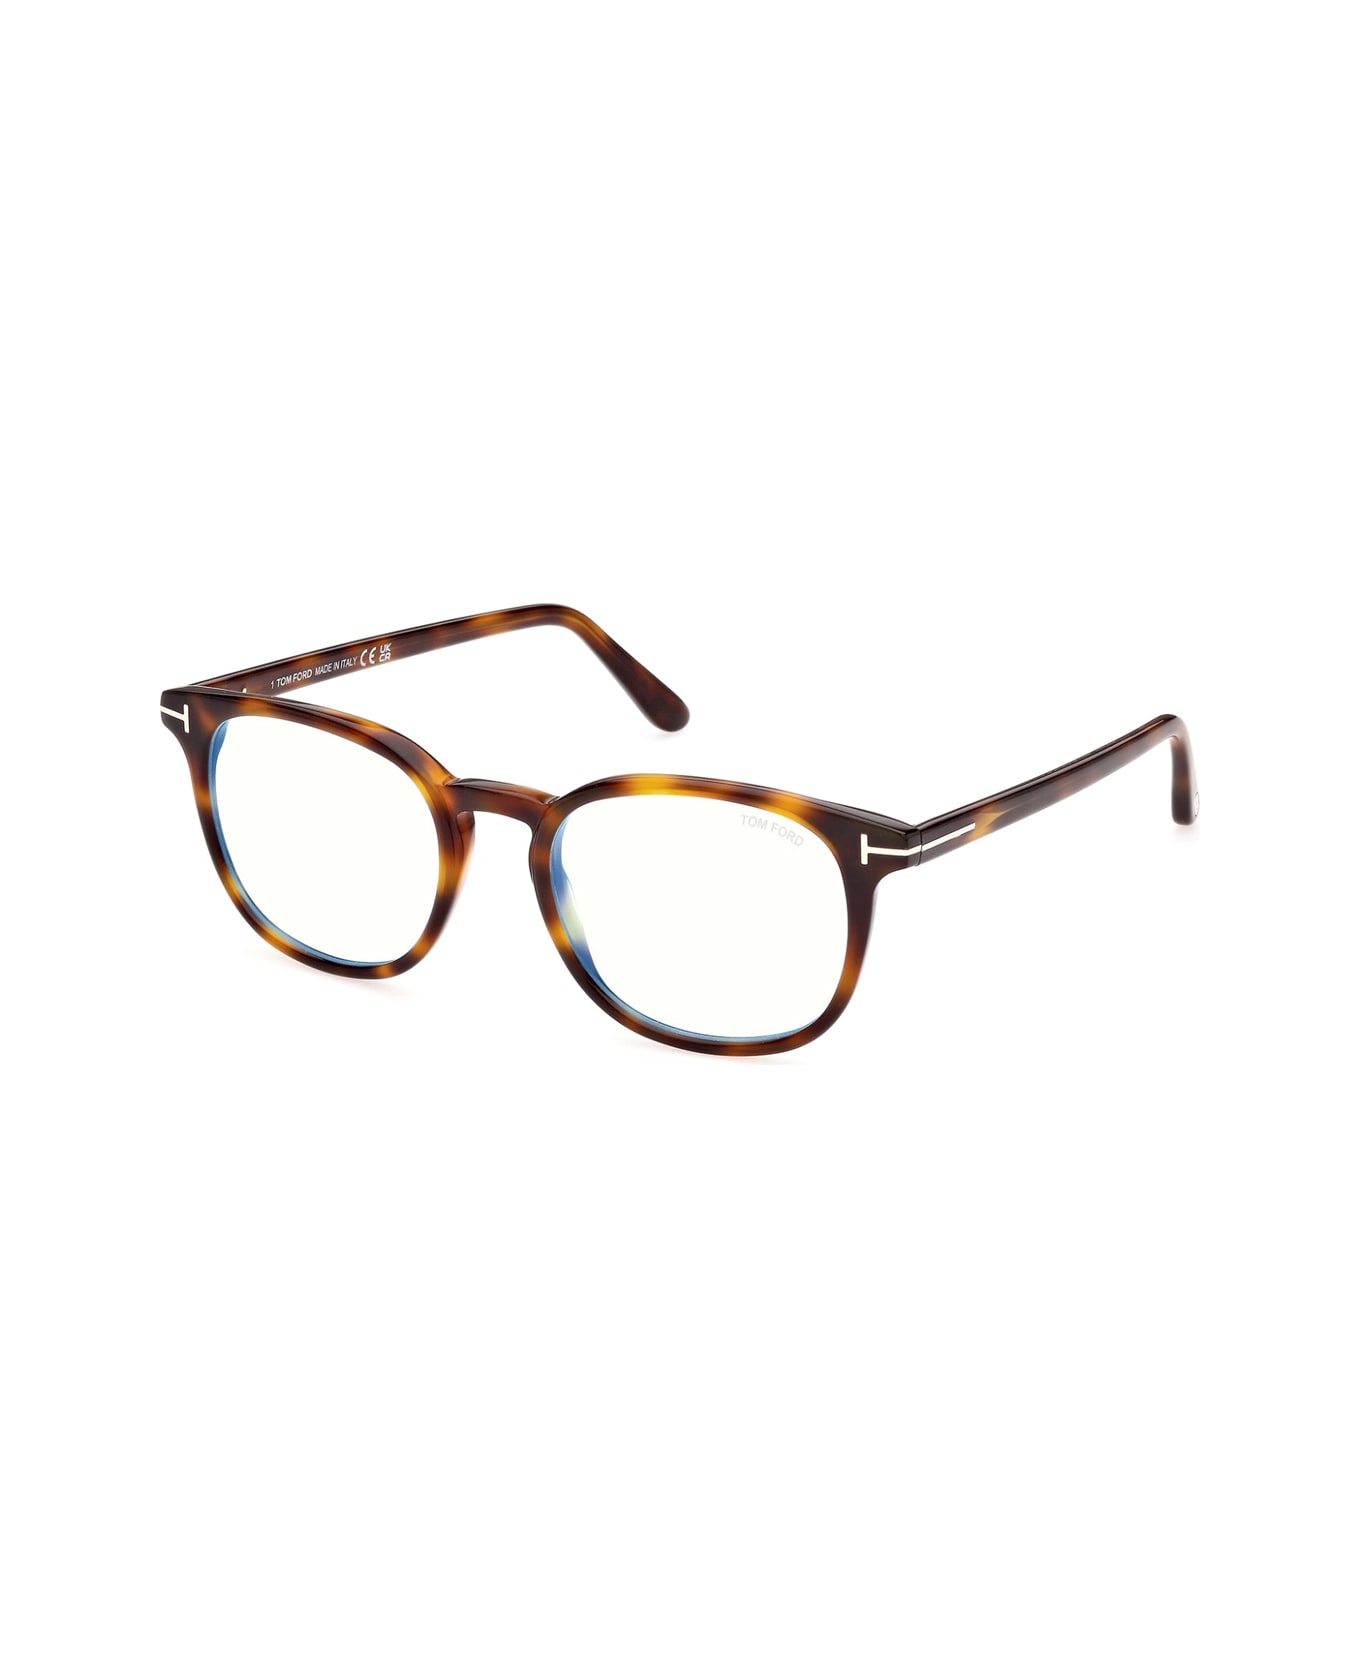 Tom Ford Eyewear Ft5819 Glasses - Marrone アイウェア